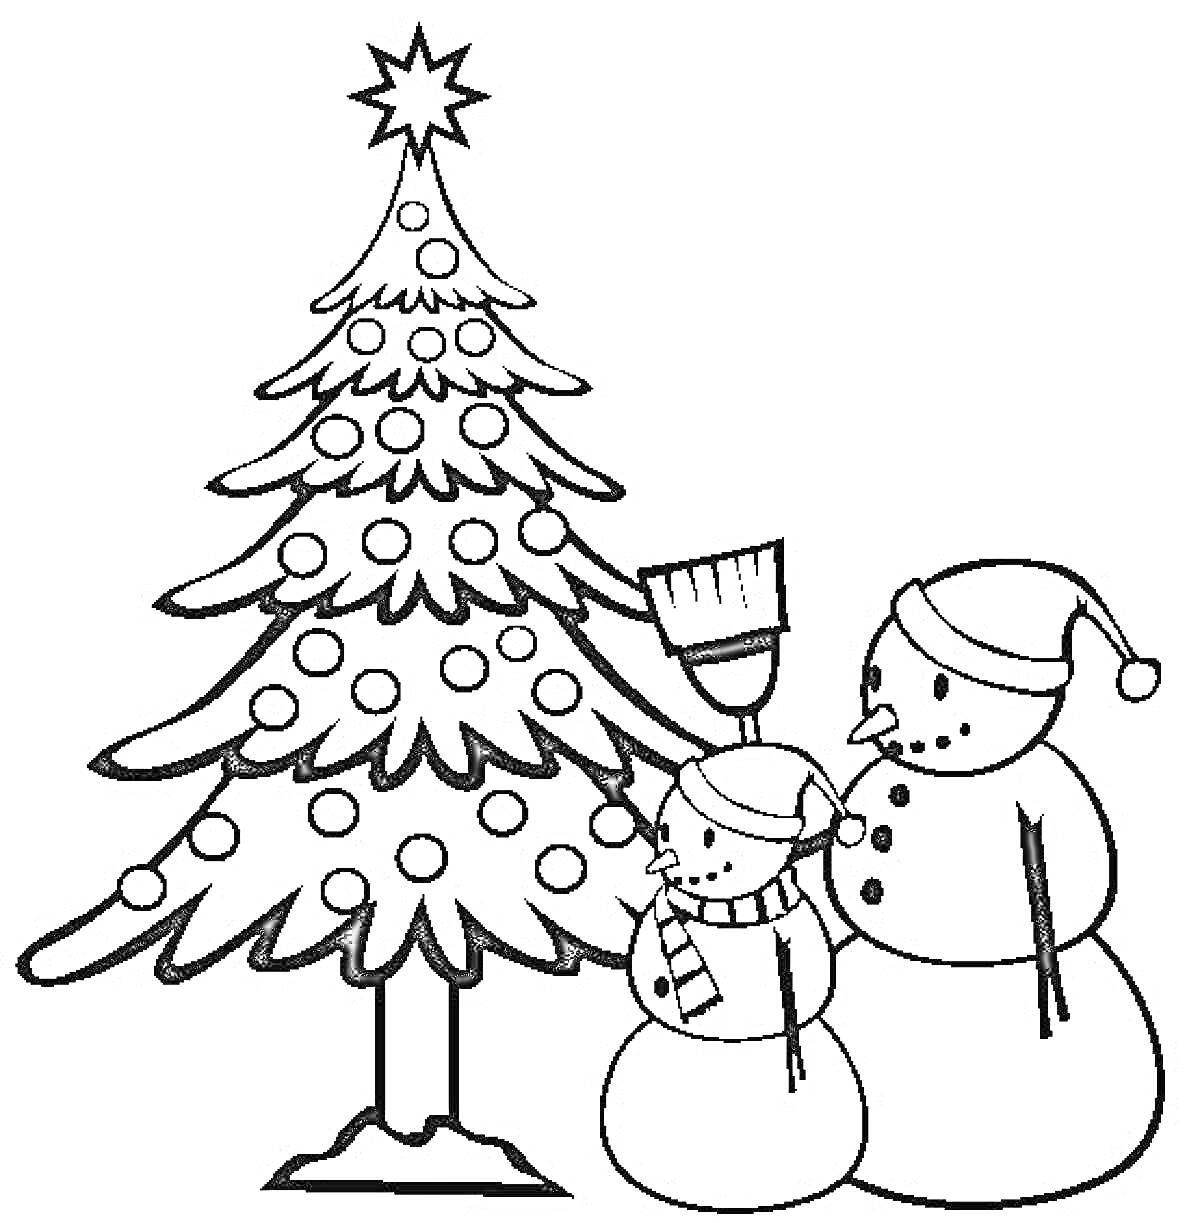 Раскраска Елка с украшениями и двумя снеговиками